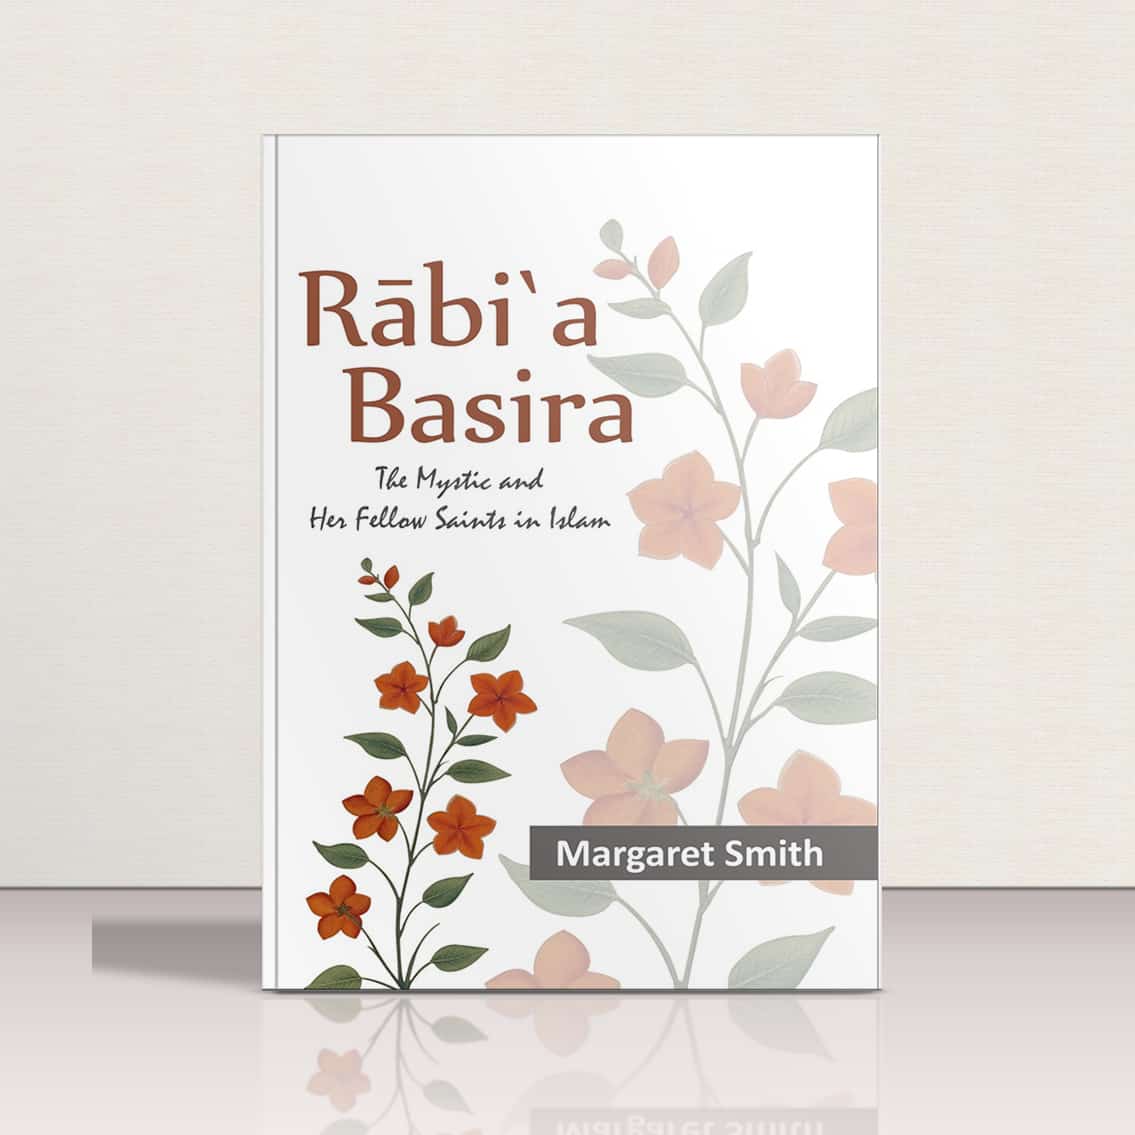 Rabia Basira by Margaret Smith